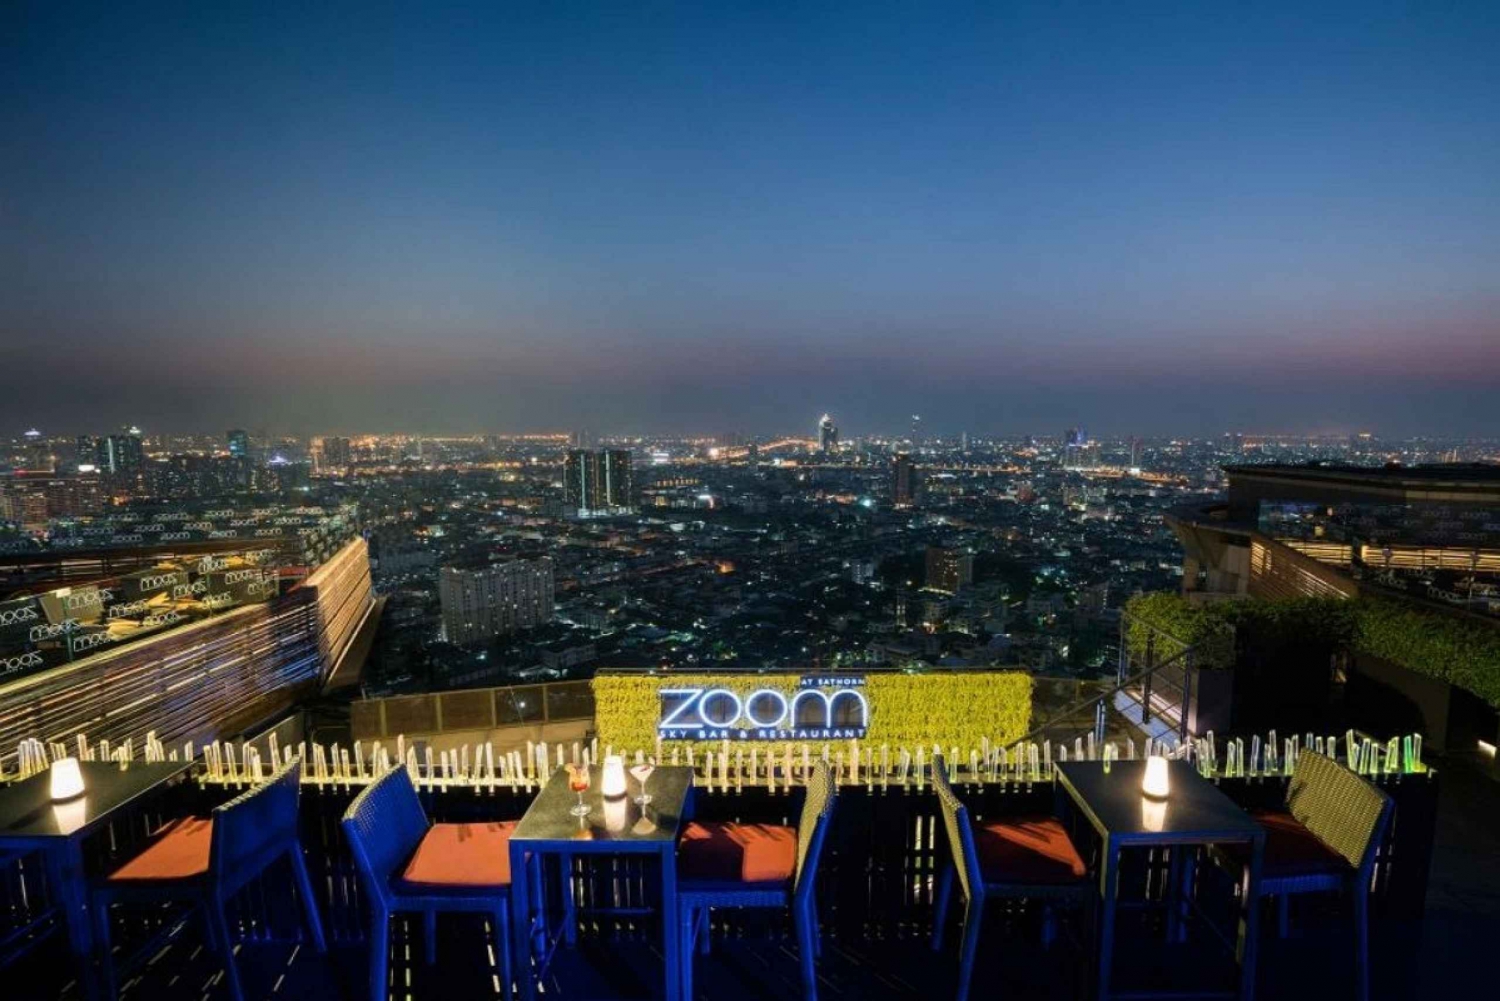 Bangkok: Zoom Sky Bar & Restaurant Drink Voucher